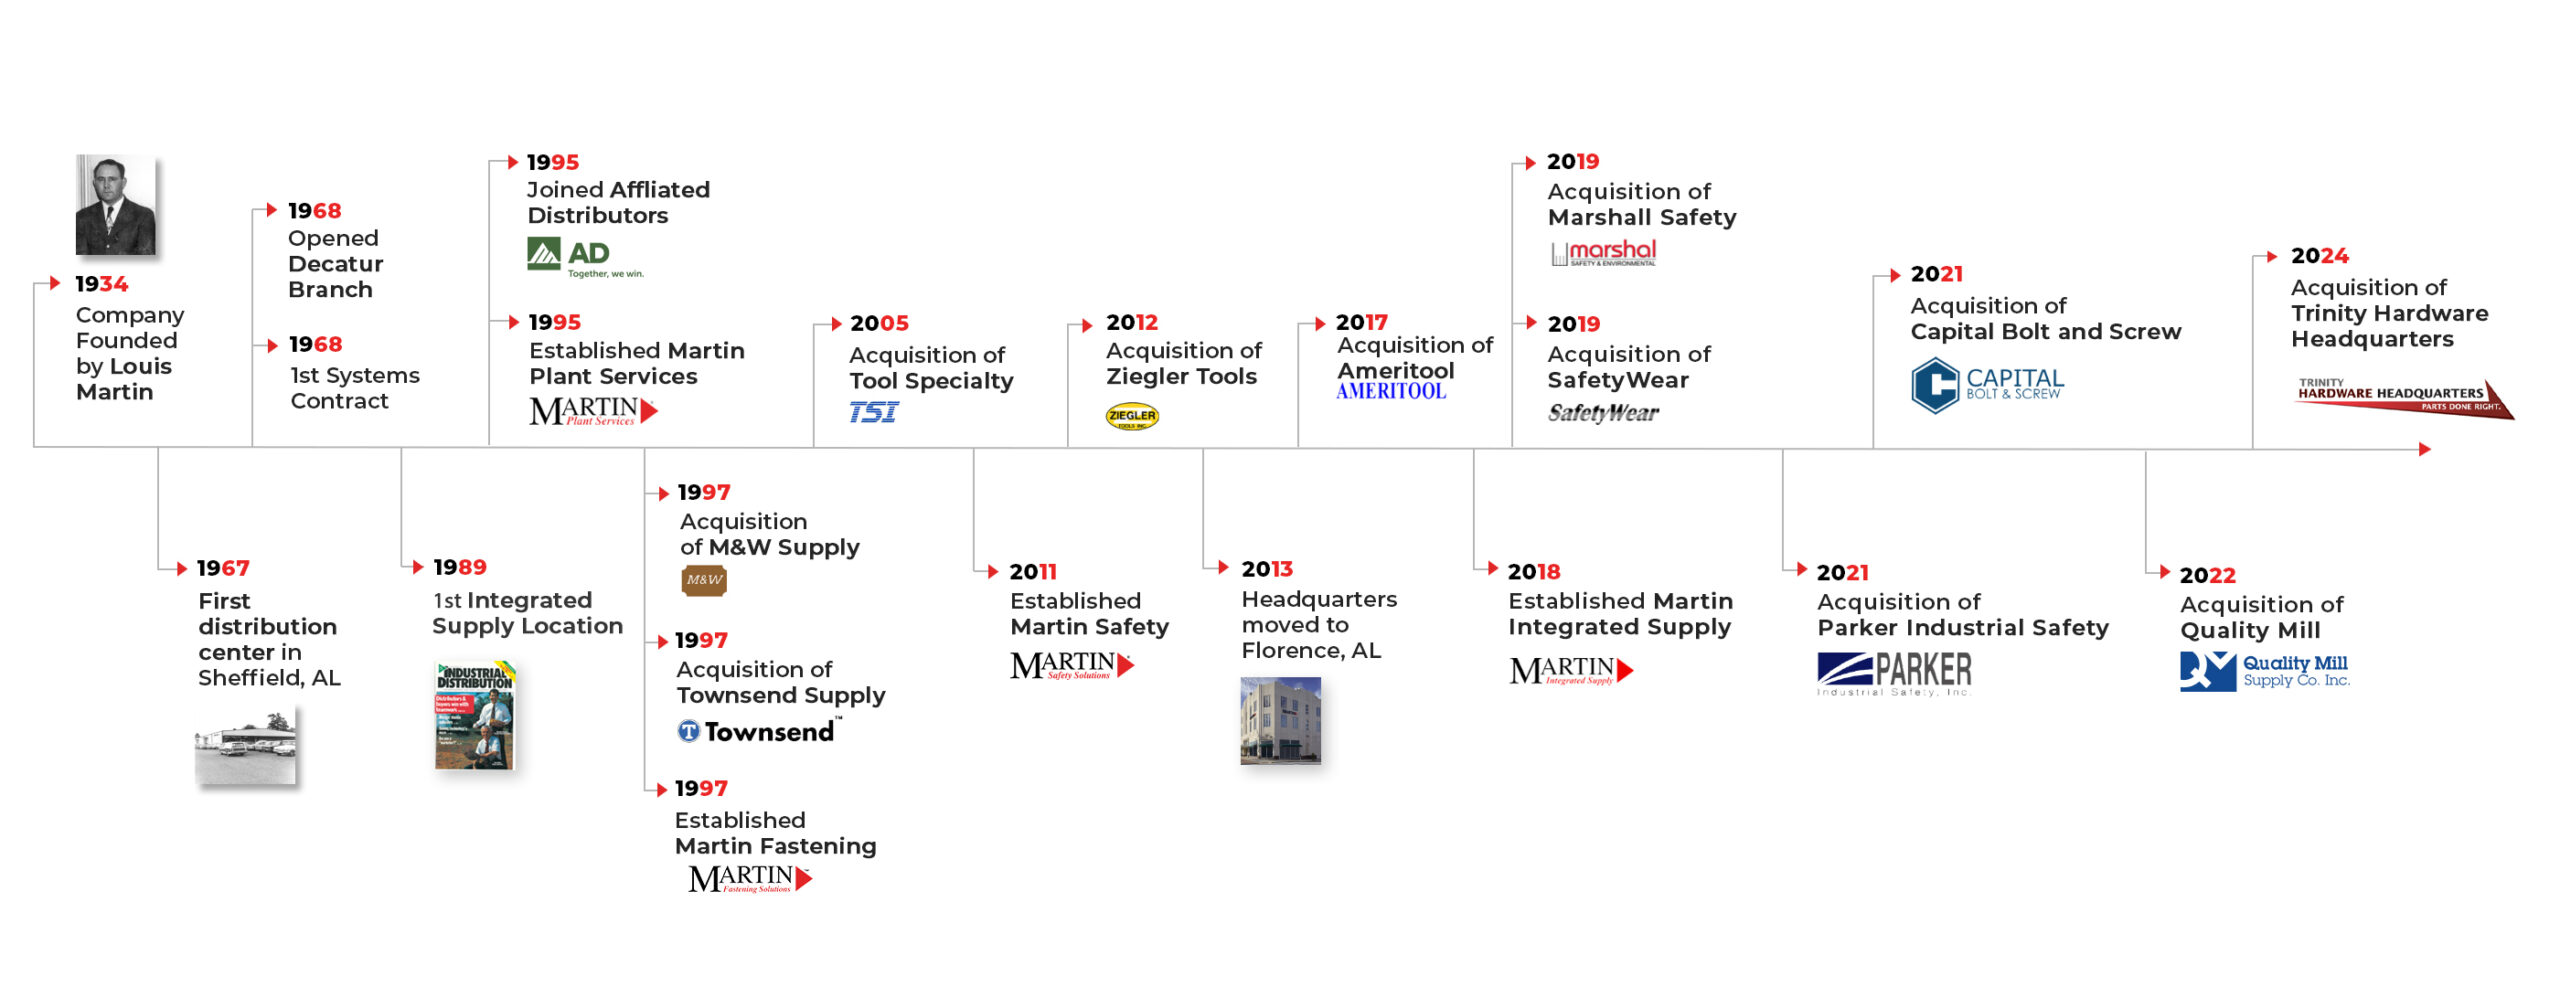 Martin Supply History timeline